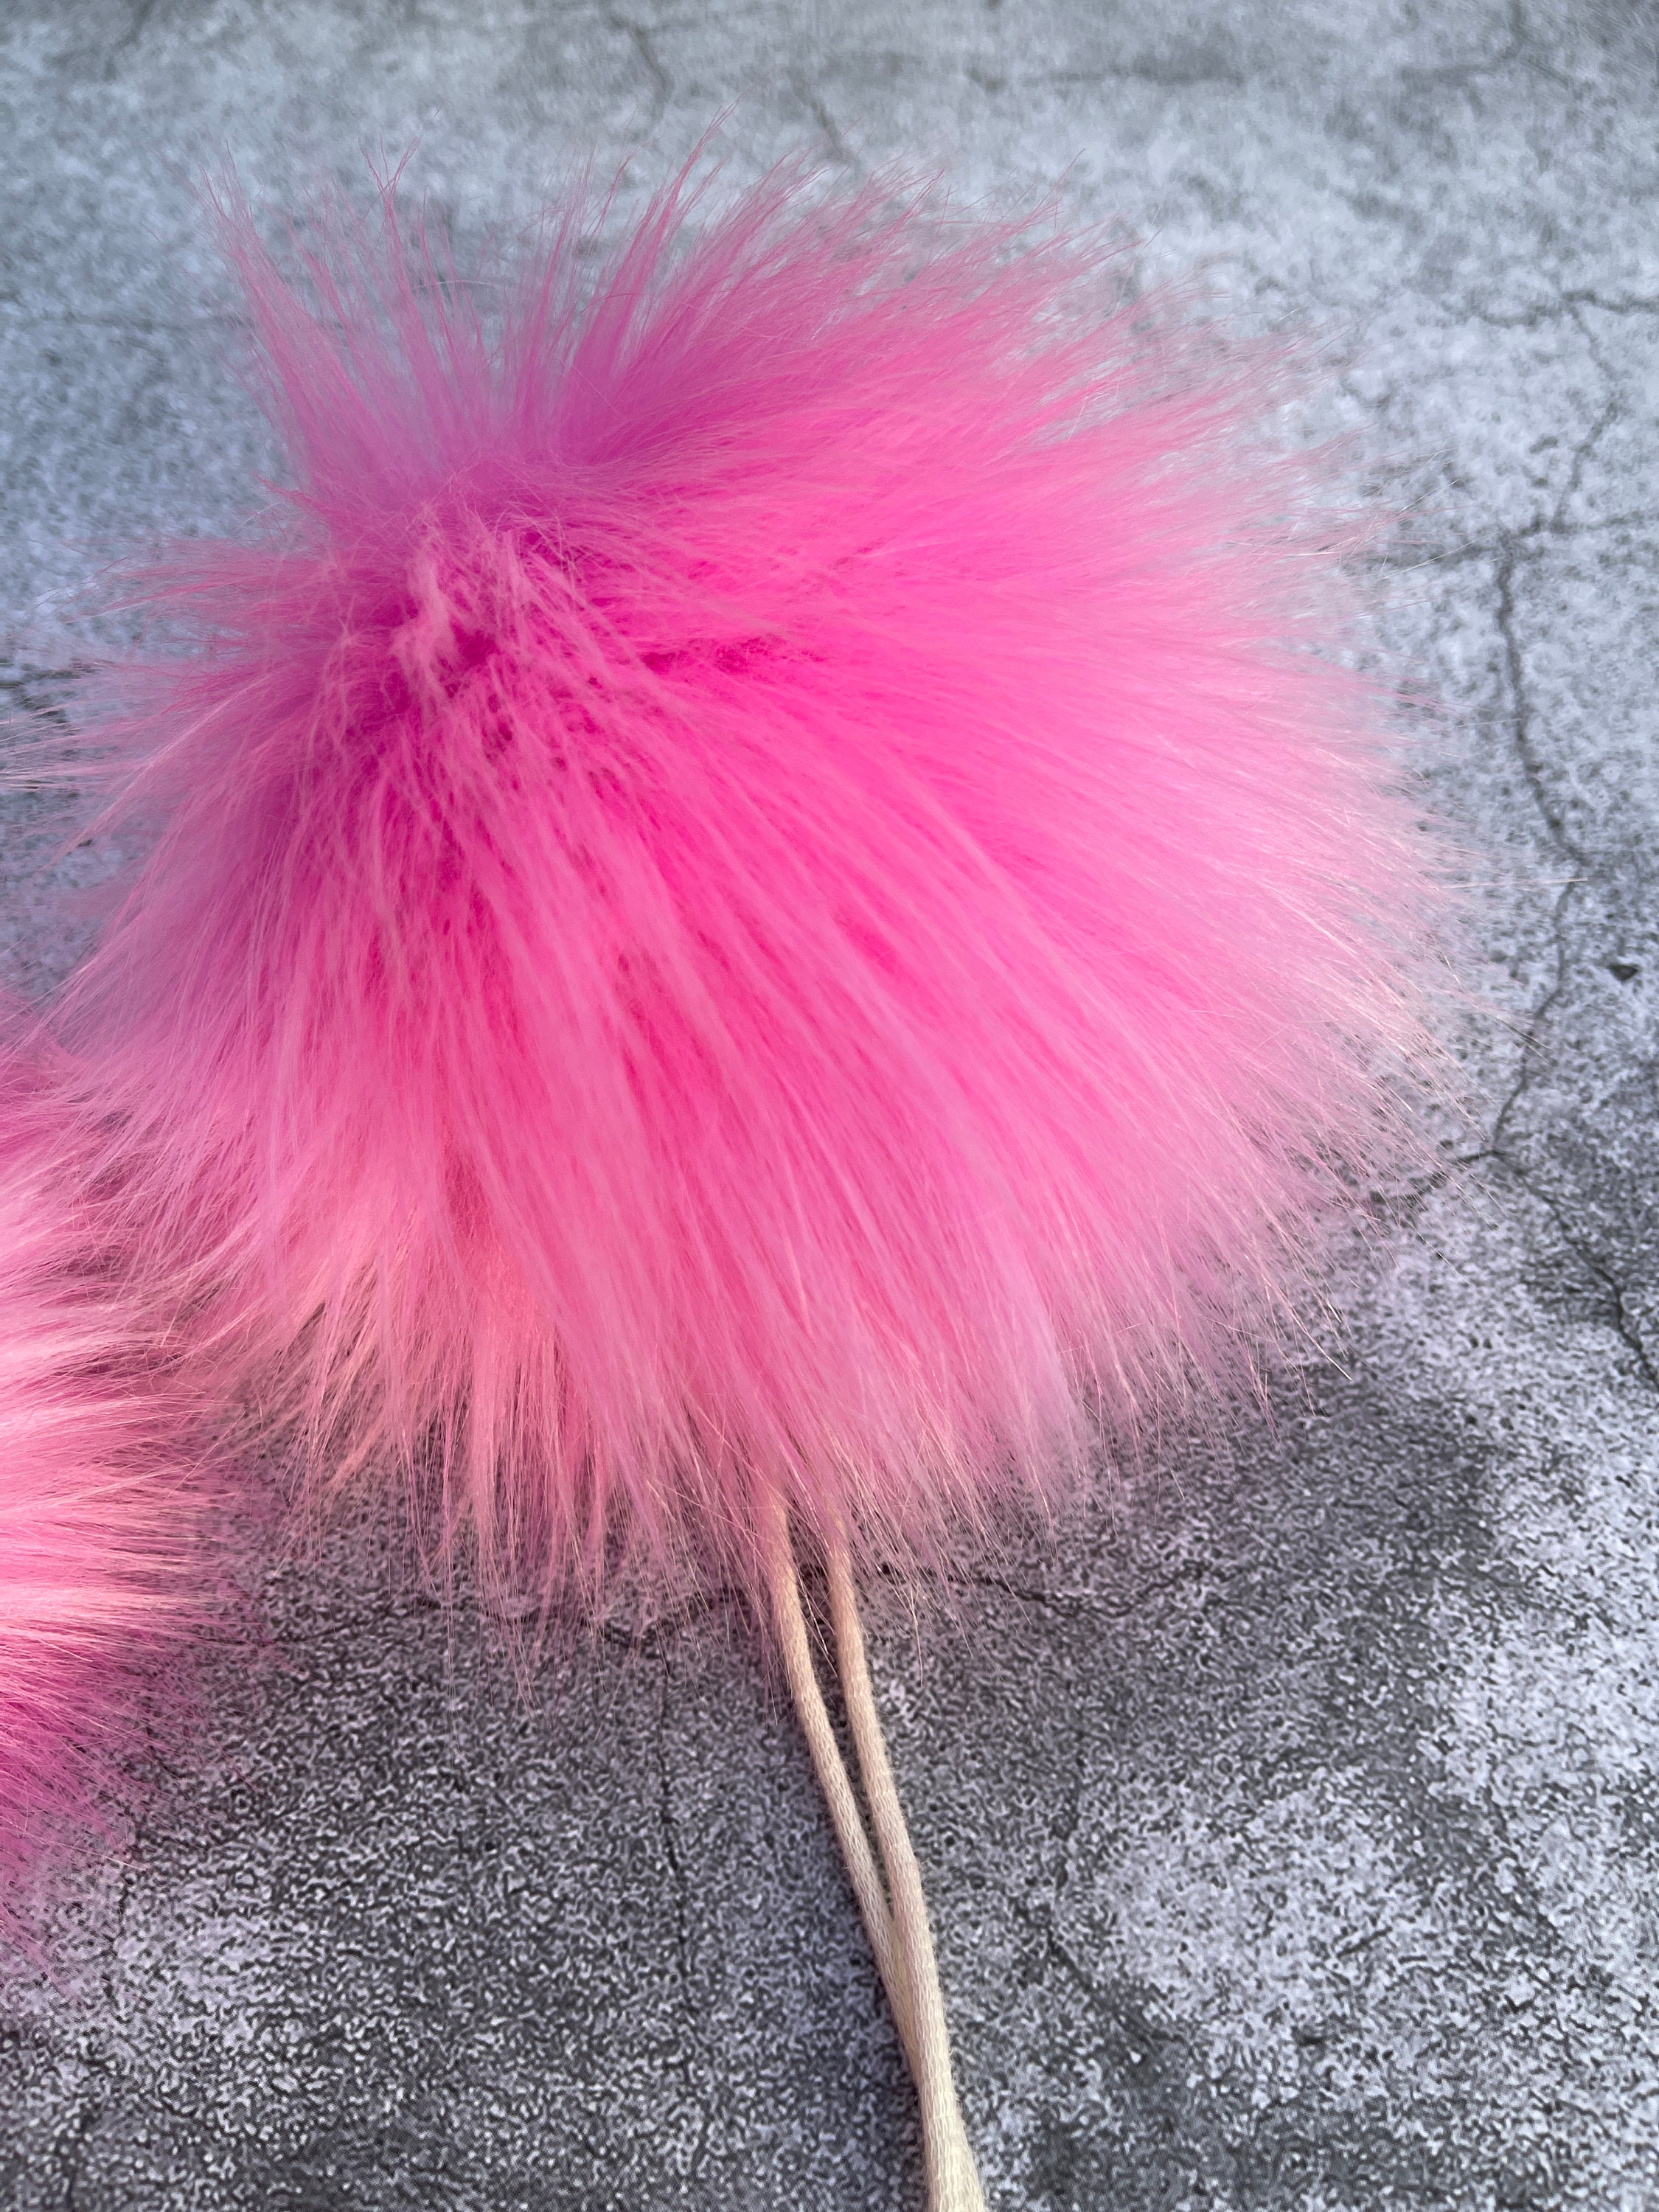 CINDWOOD Crafts Cancer Awareness Pink Pom Pom Keychain